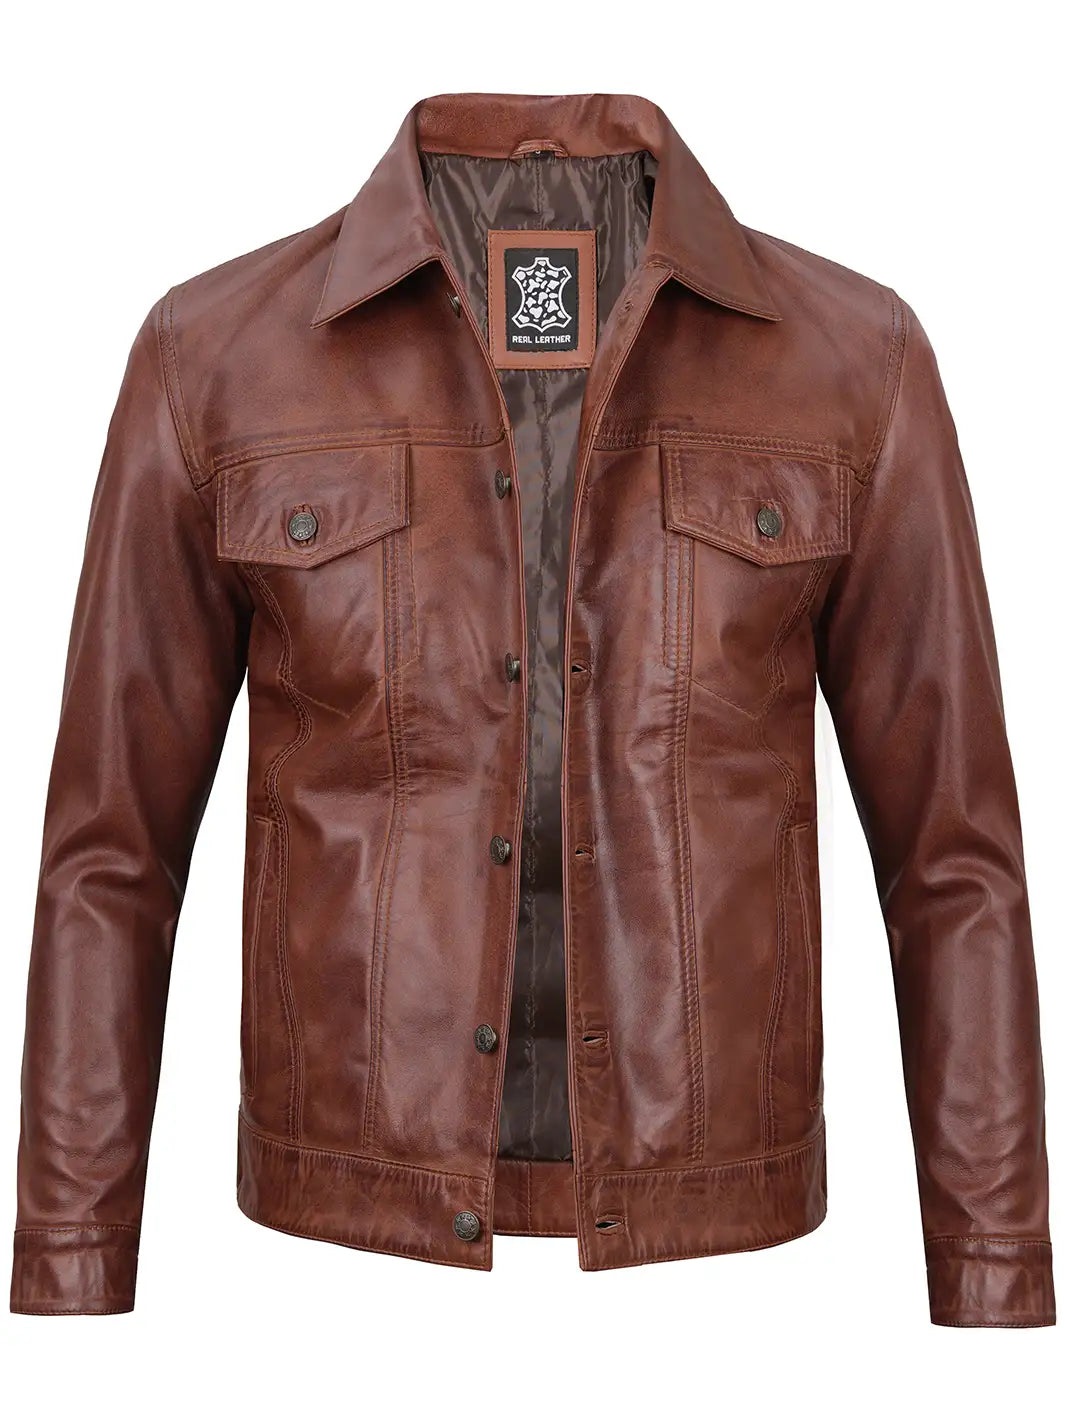 Mens cognac leather trucker jacket